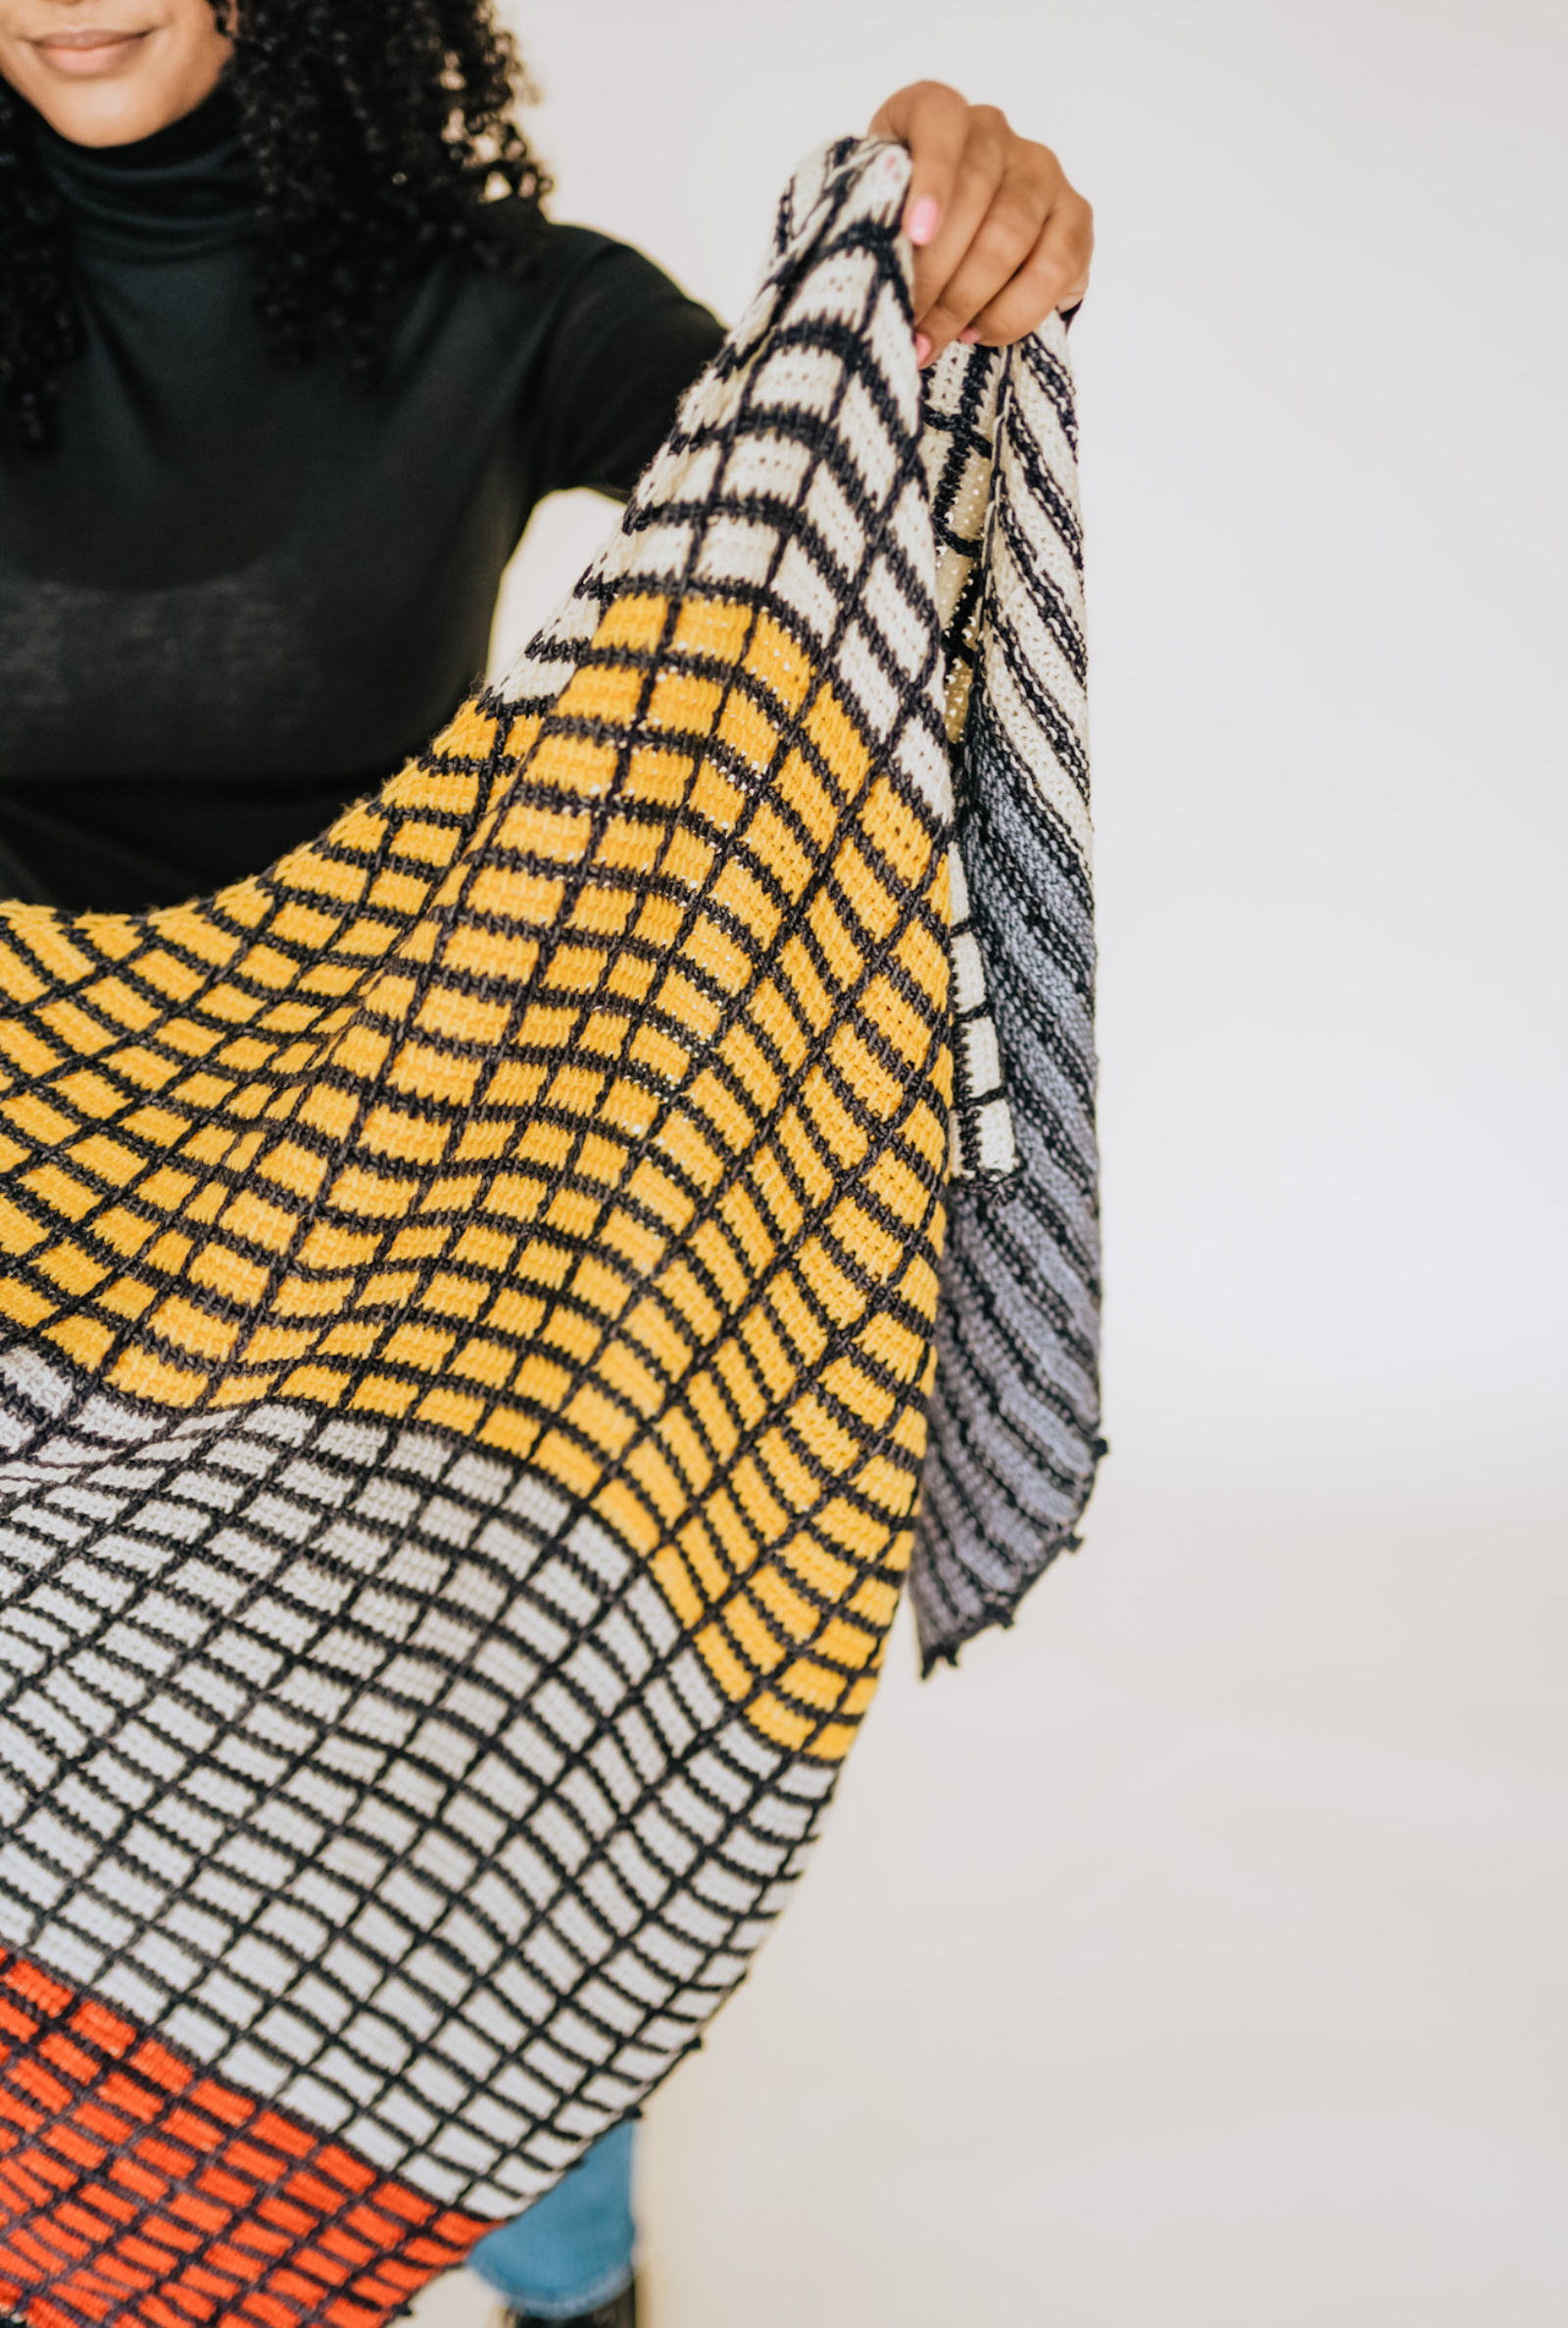 Cadenza Wrap // Crochet PDF Pattern